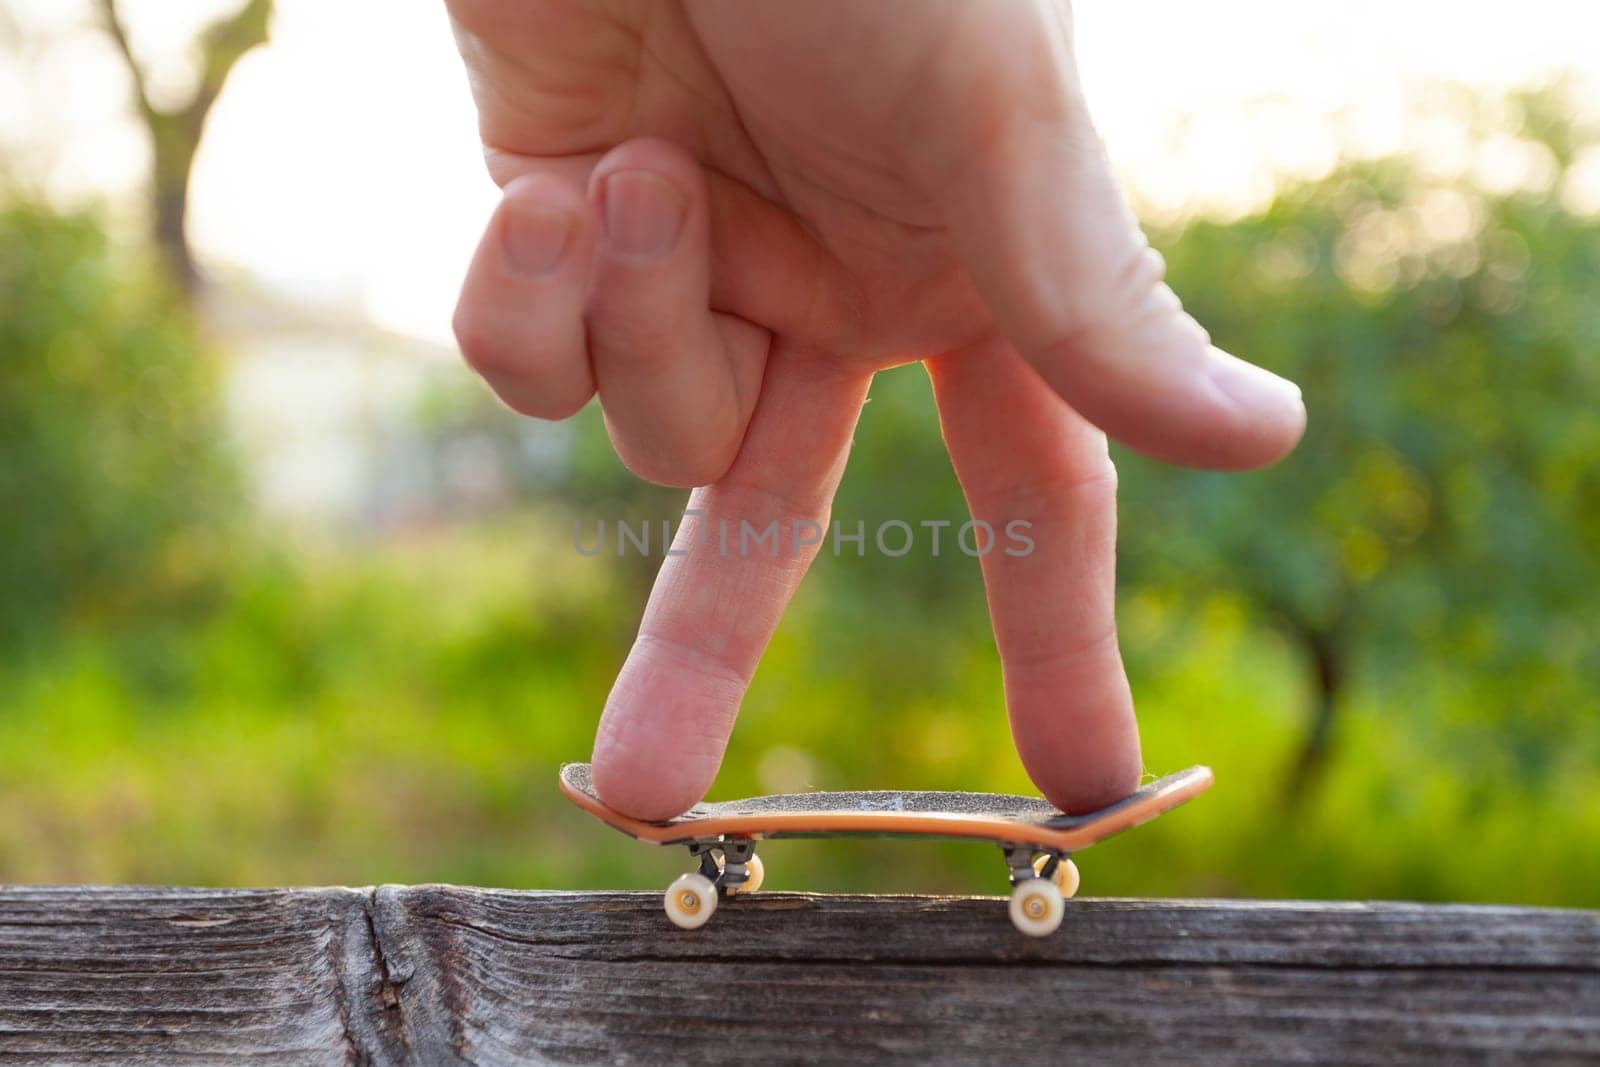 A man's fingers ride a small skateboard like a little man. High quality photo